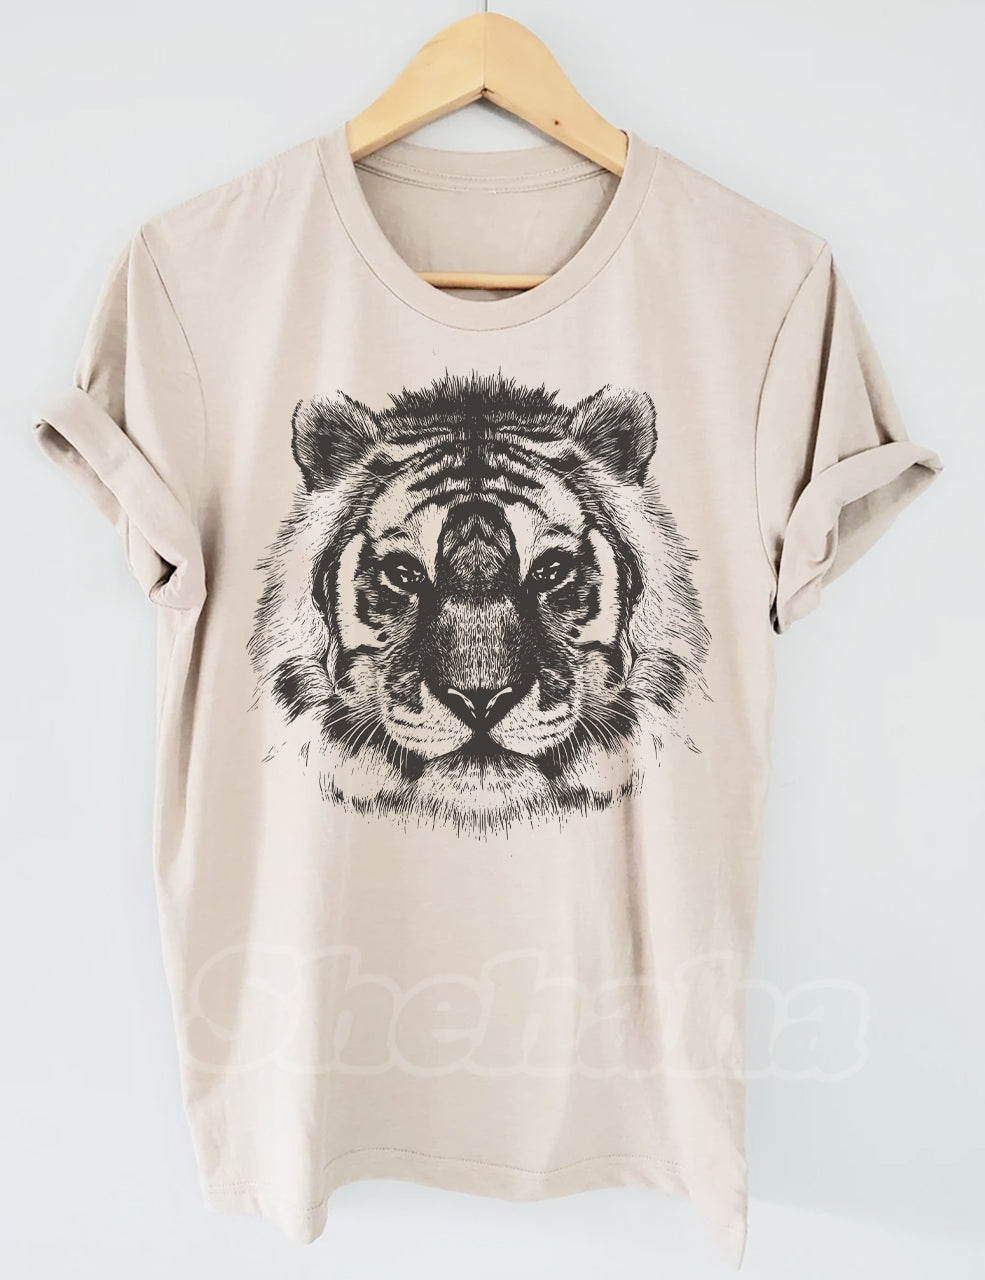 Tiger Face T-shirt